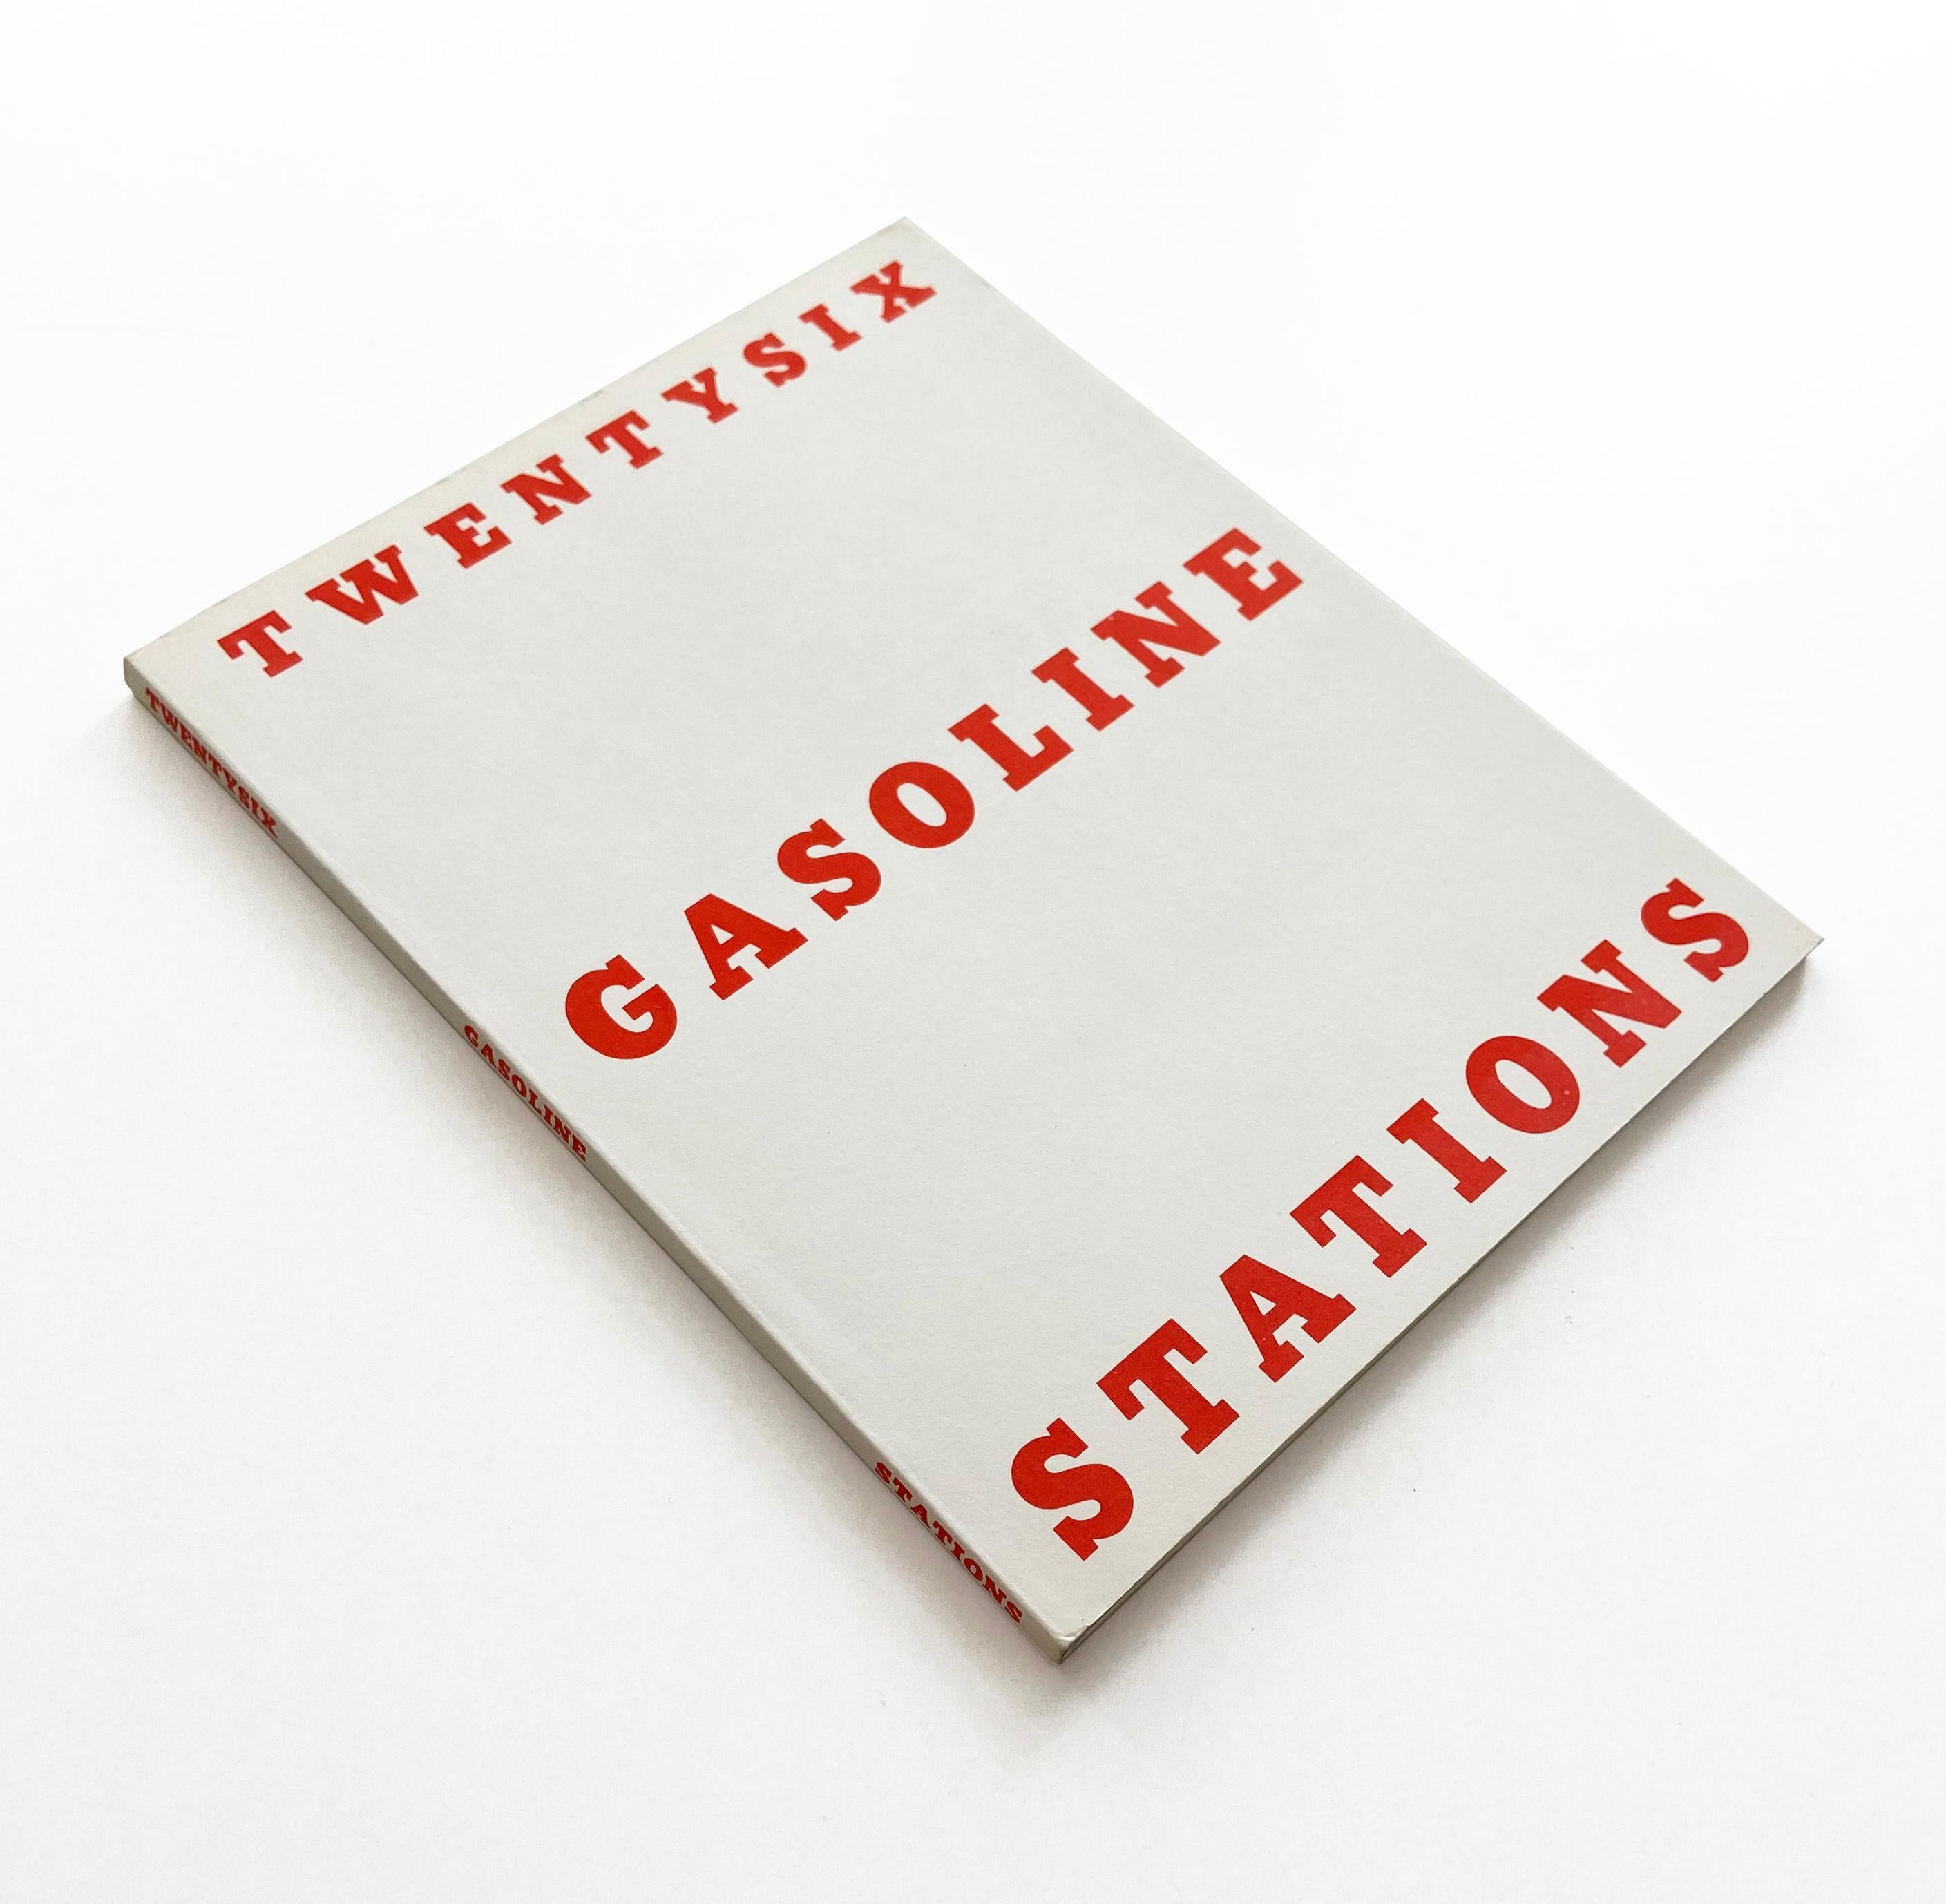  Twentysix Gasoline Stations, Pop Art, Conceptual Art, 20th Century - Print by Ed Ruscha